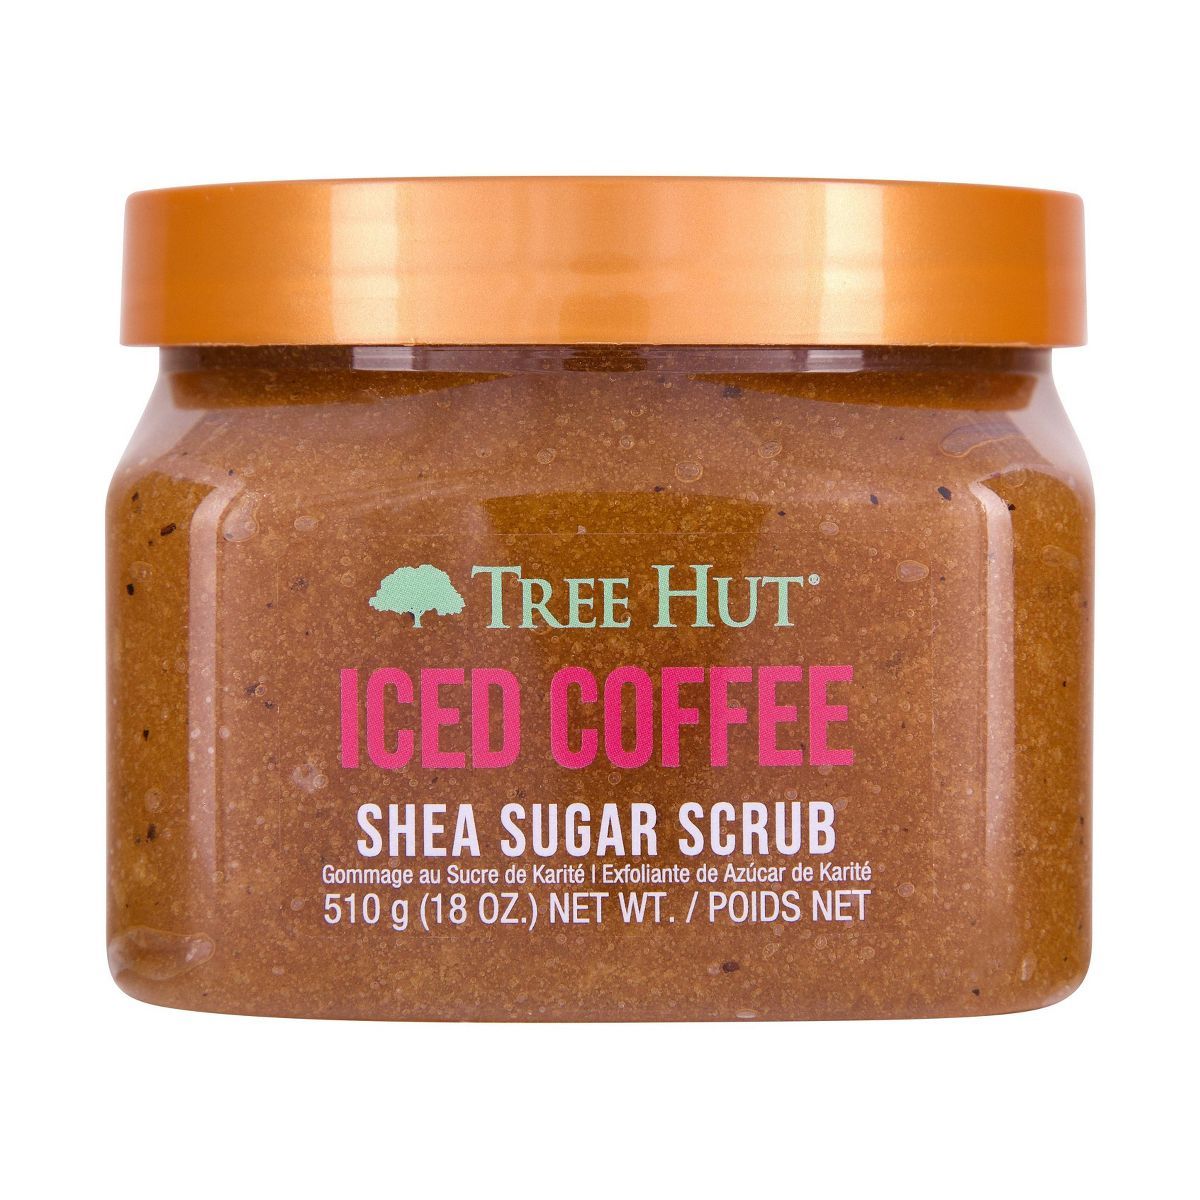 Tree Hut Hazelnut & Iced Coffee Shea Sugar Body Scrub - 18oz | Target